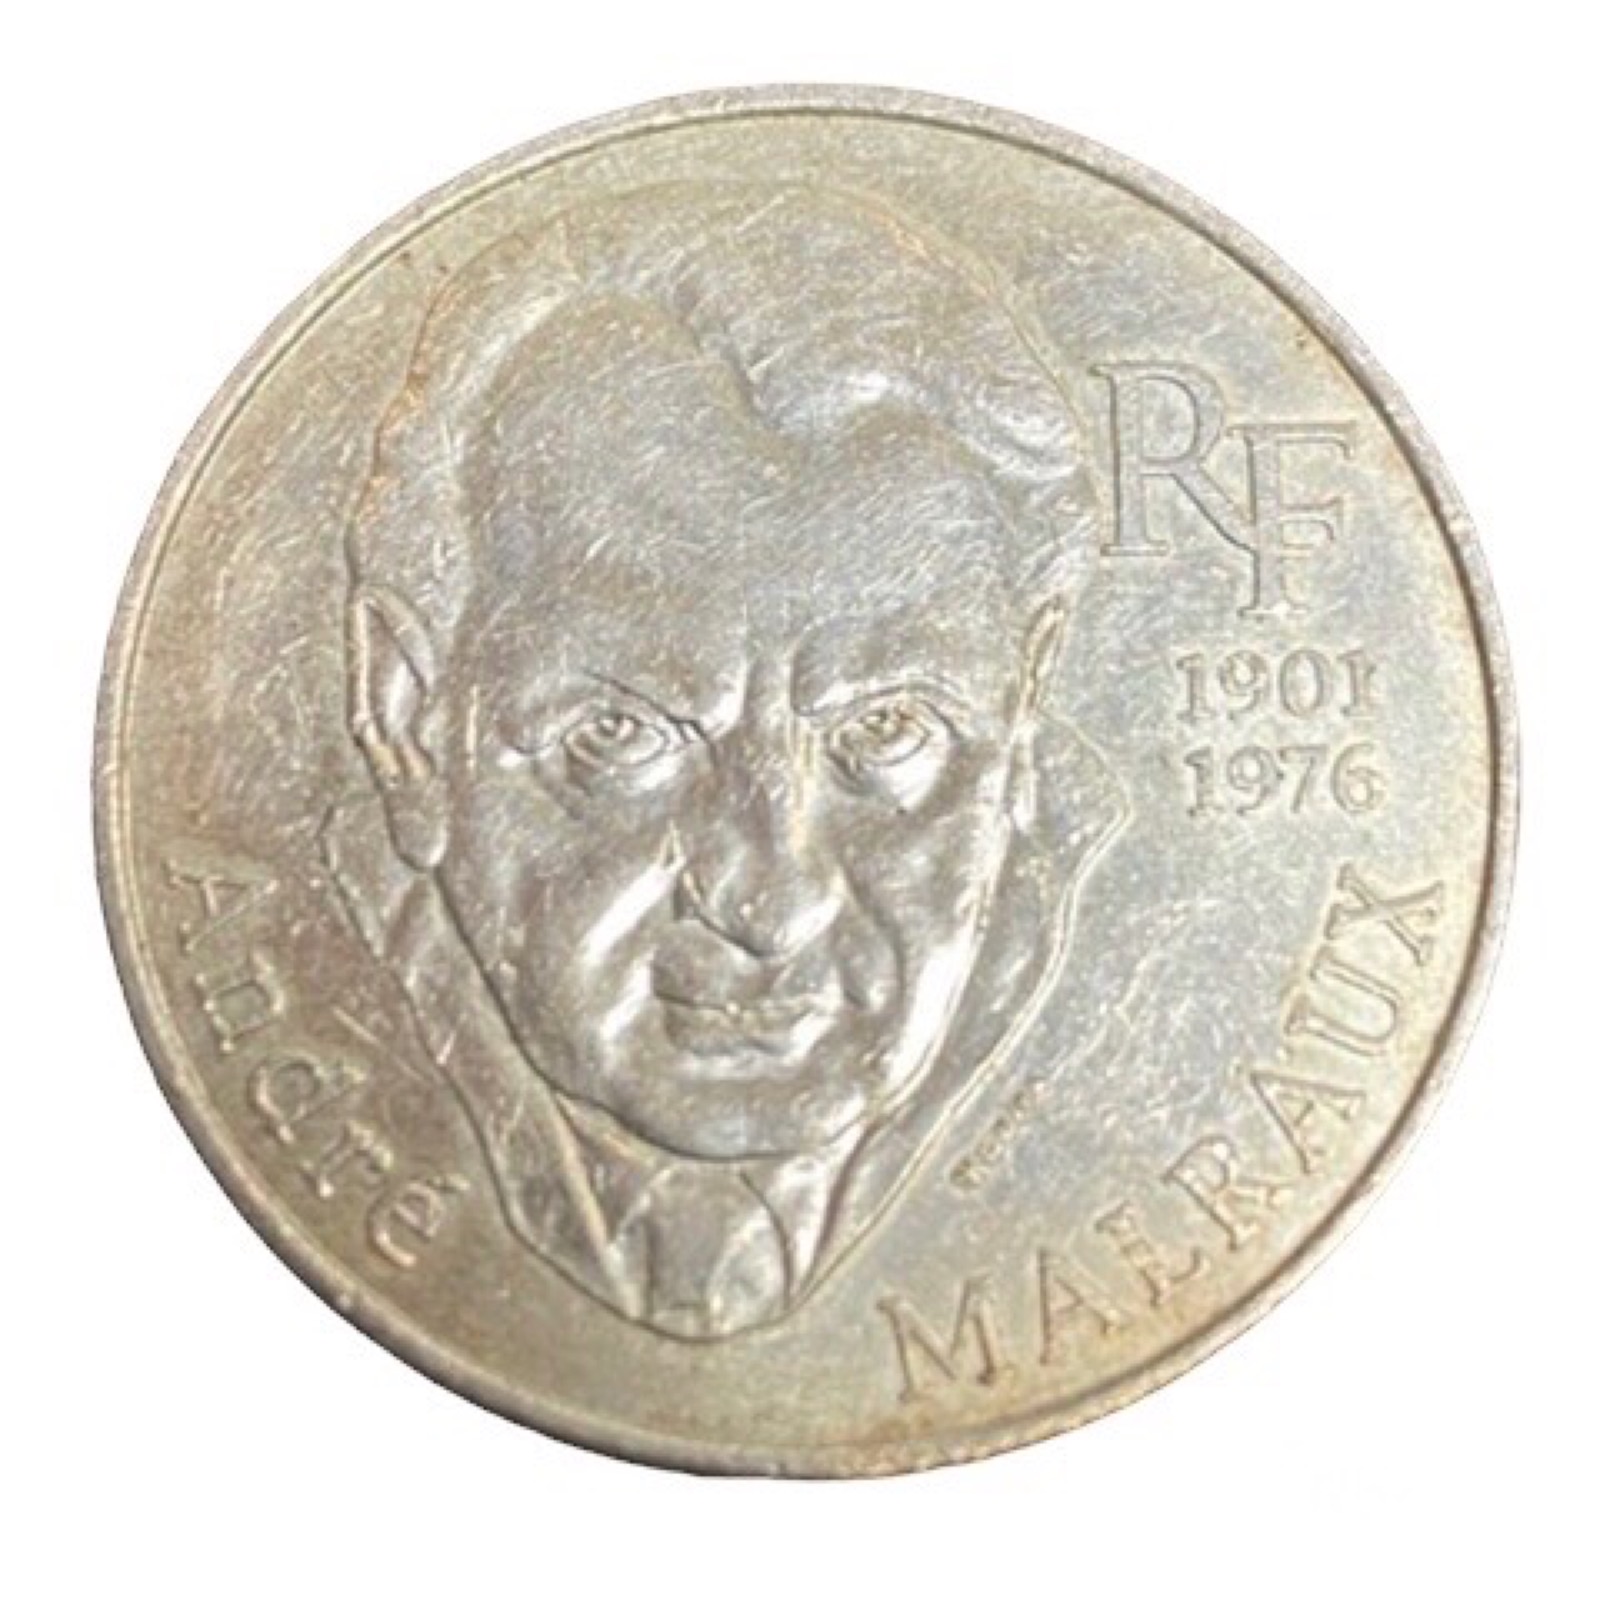 100 Francs Malraux 1997 TB